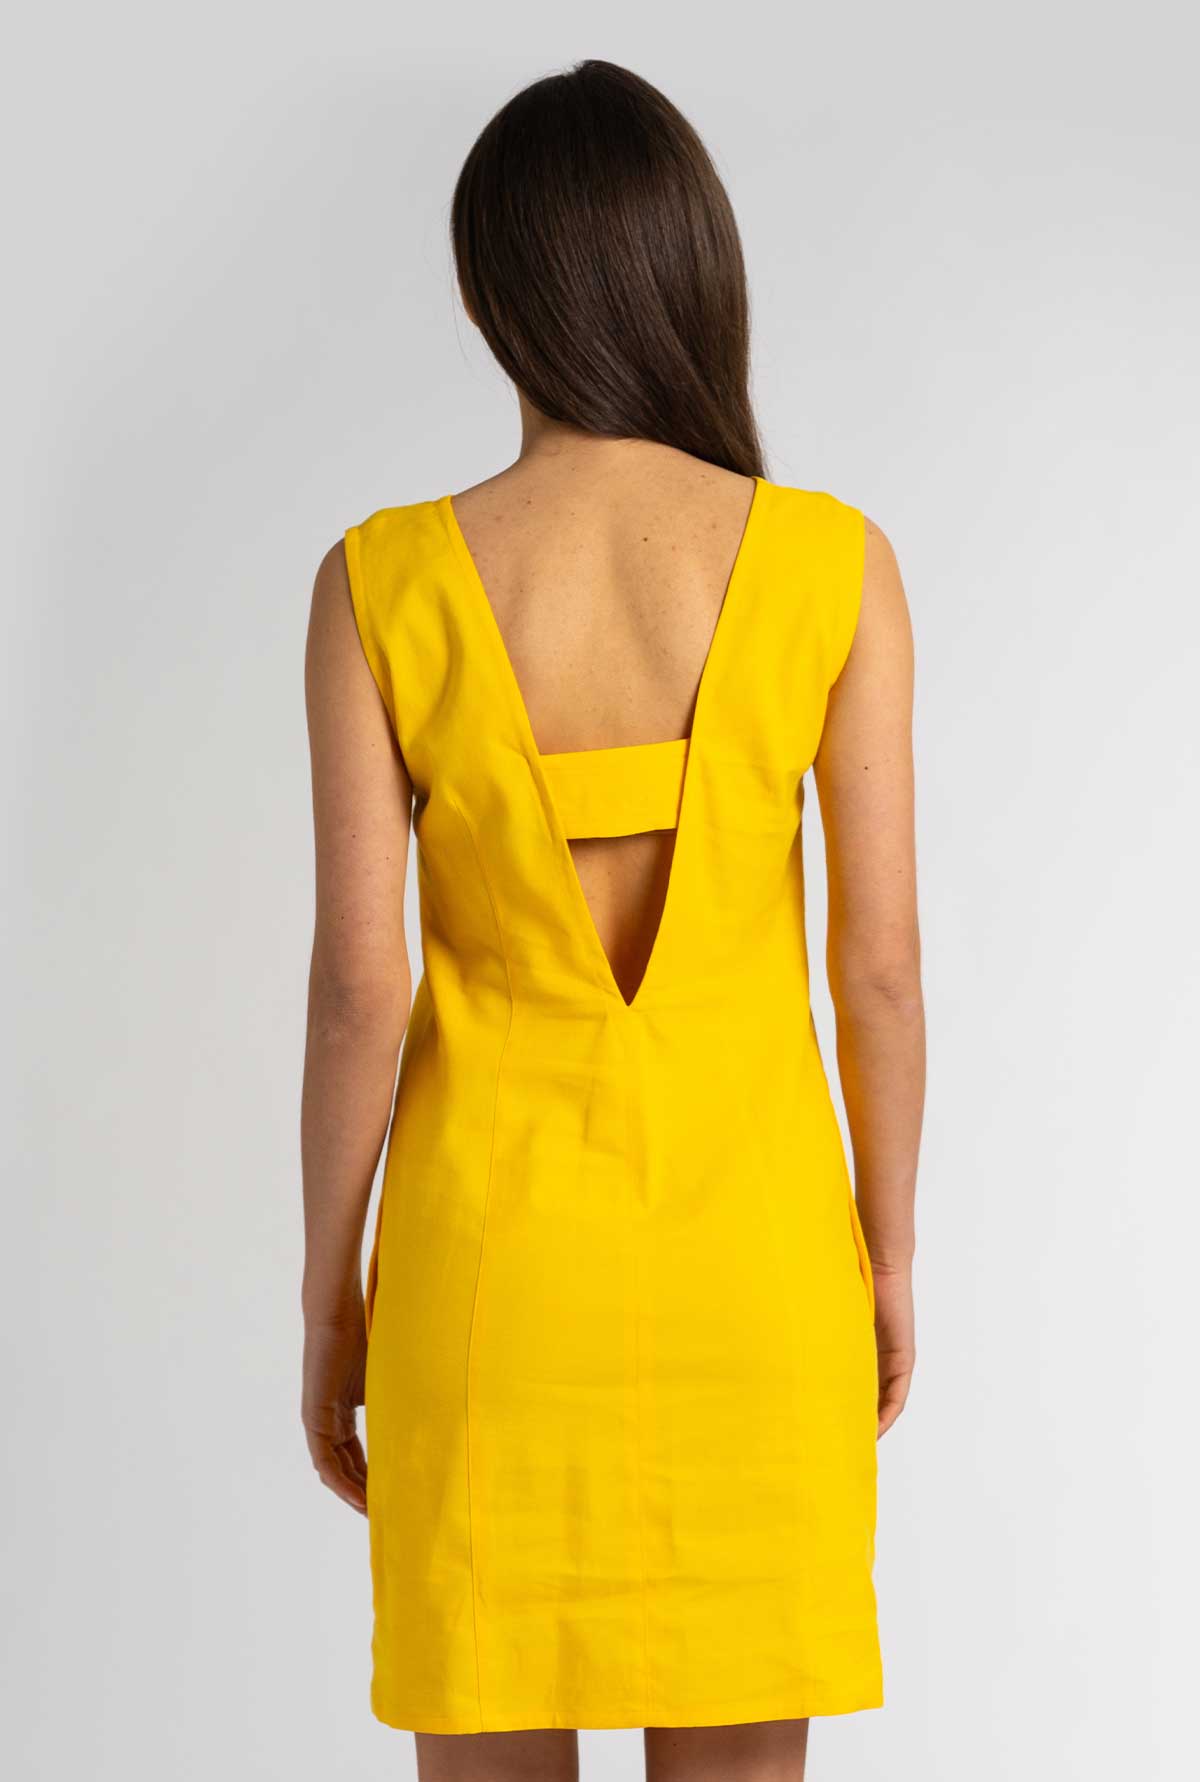 Amelia Sleeveless Midi Dress - Yellow and Orange Dress